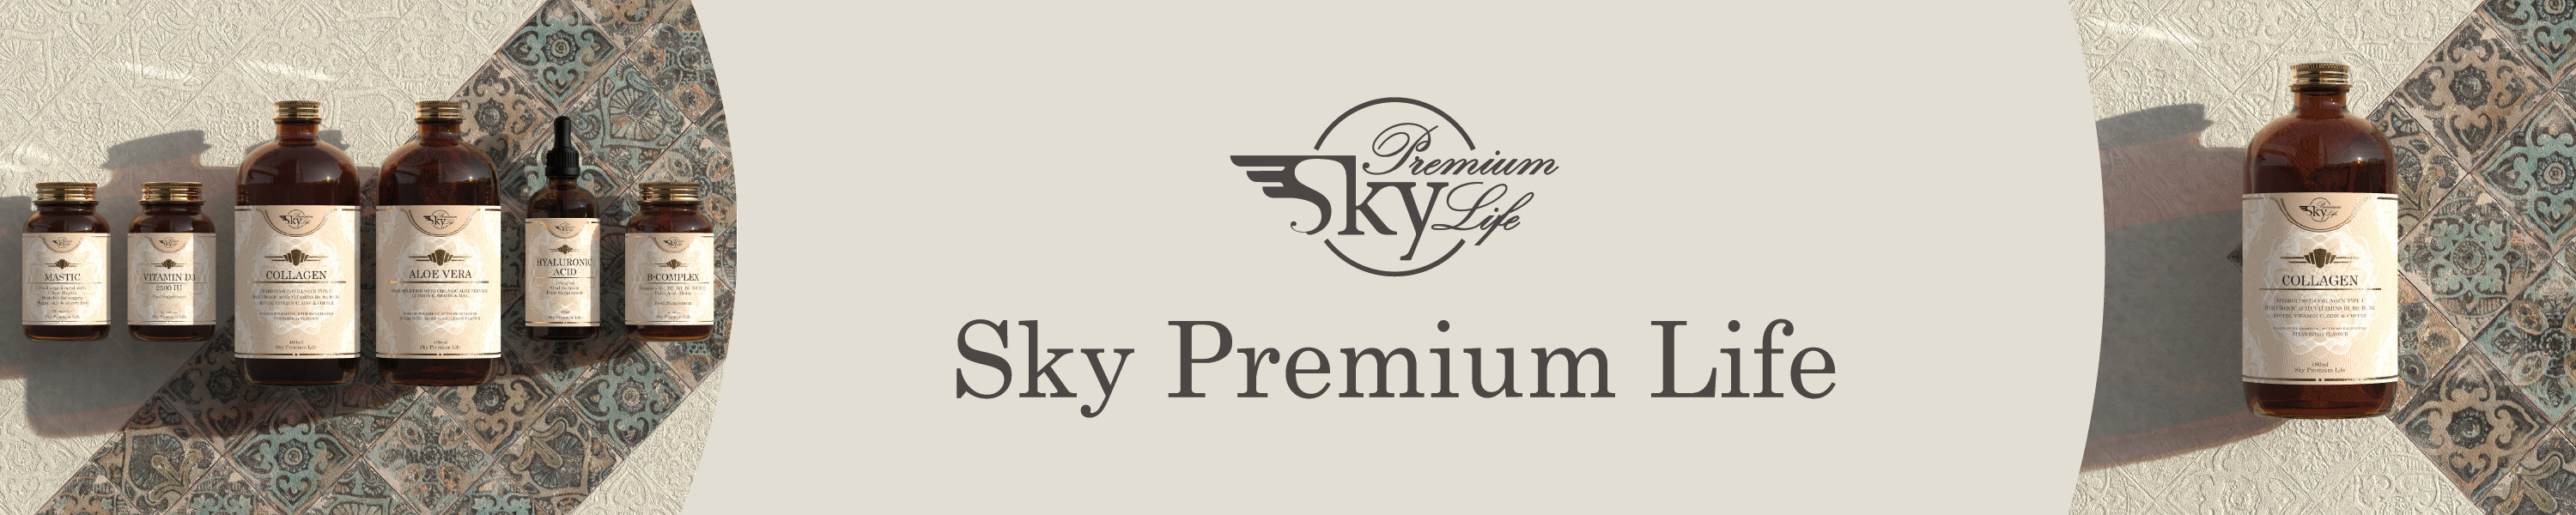 SKY PREMIUM LIFE - banner